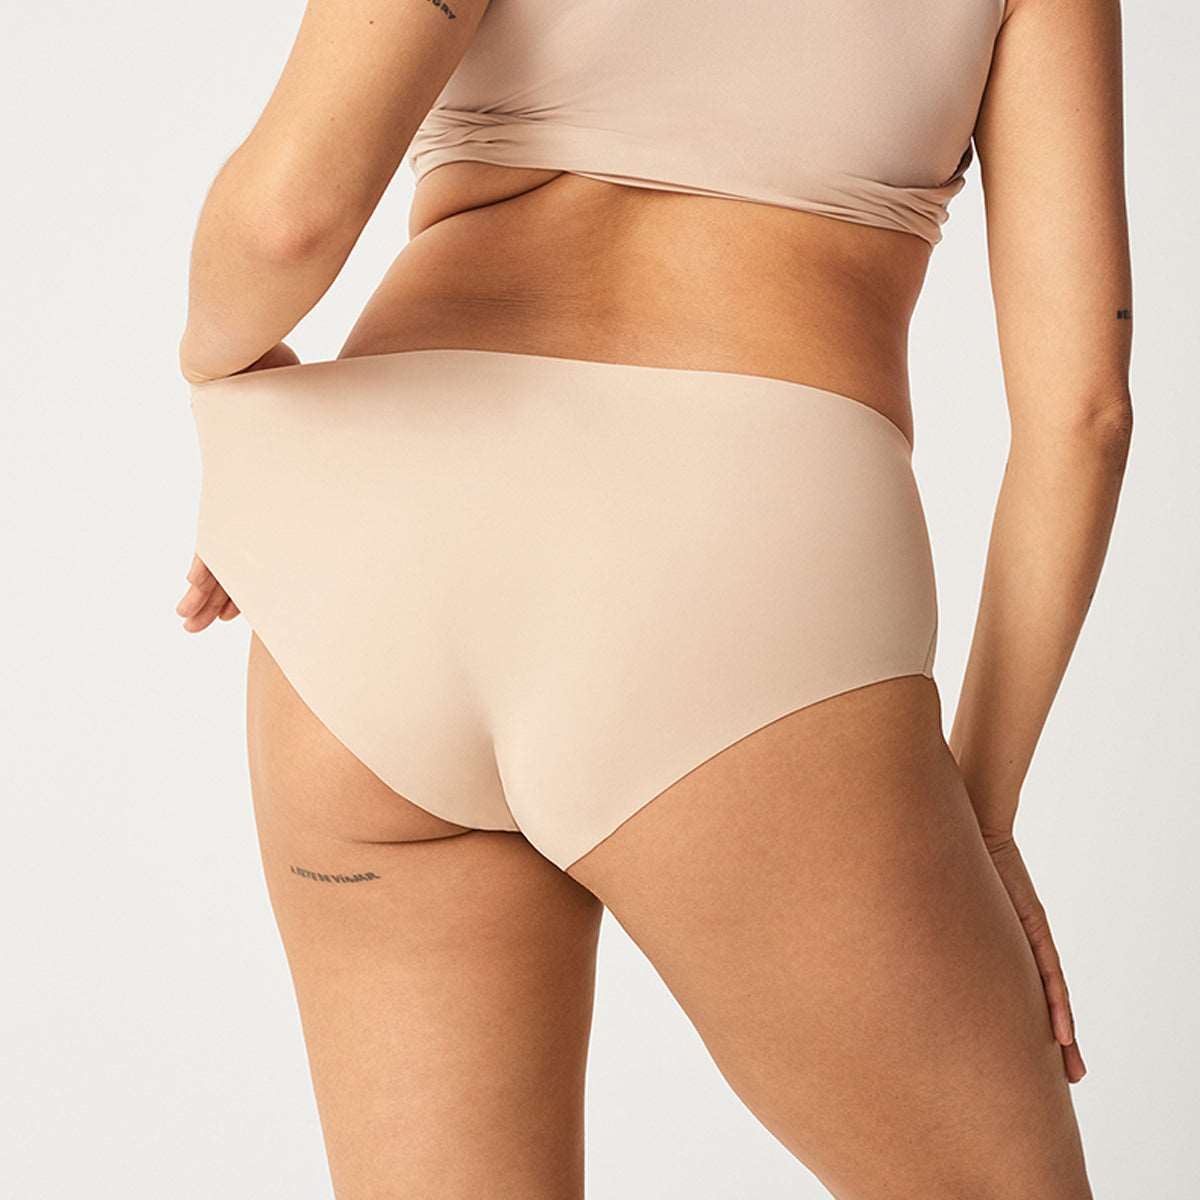 Carole Hochman Women's Underwear Silky Soft Uganda